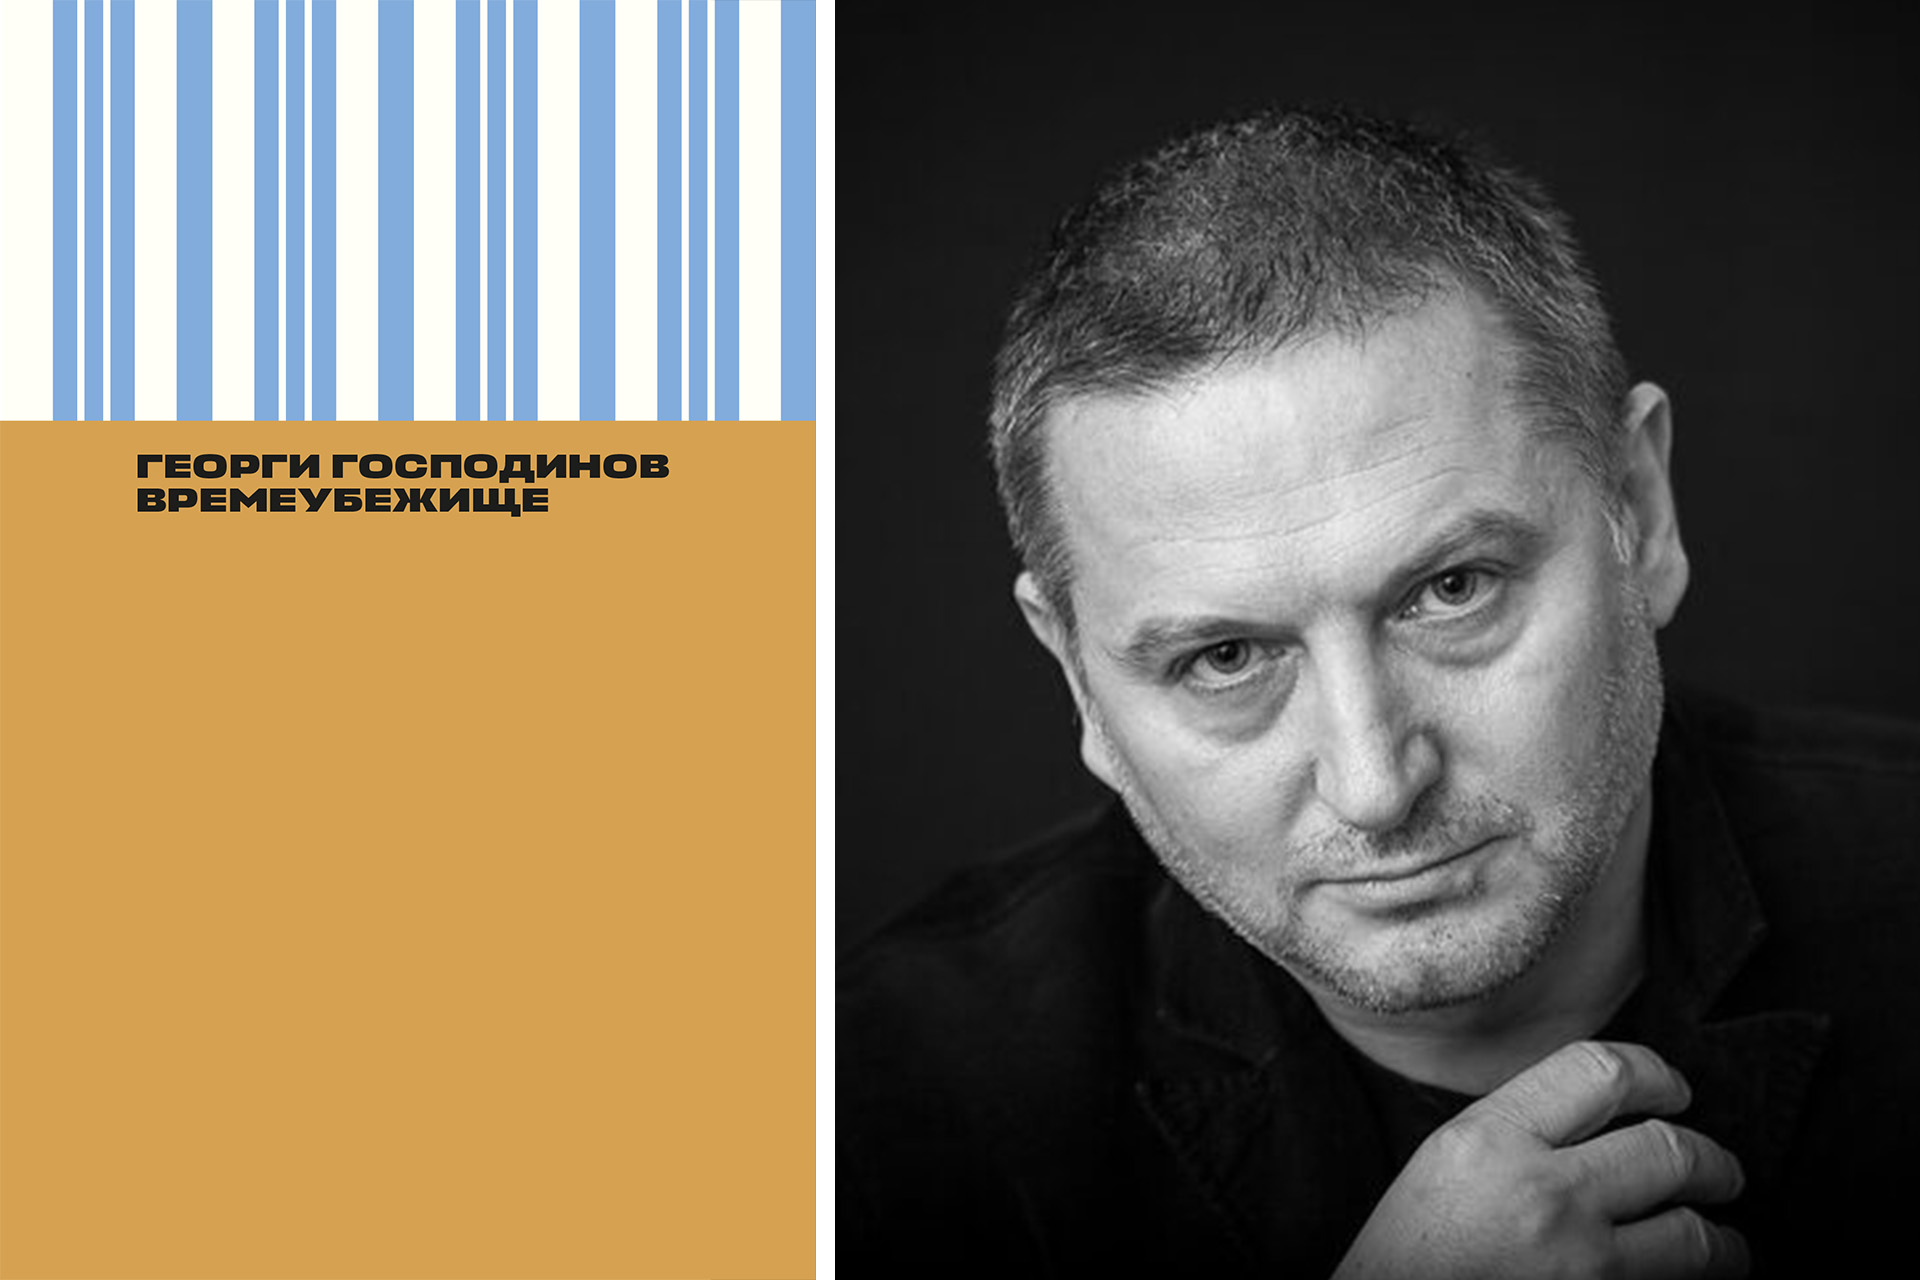 Слева: обложка книги; справа: Георги Господинов